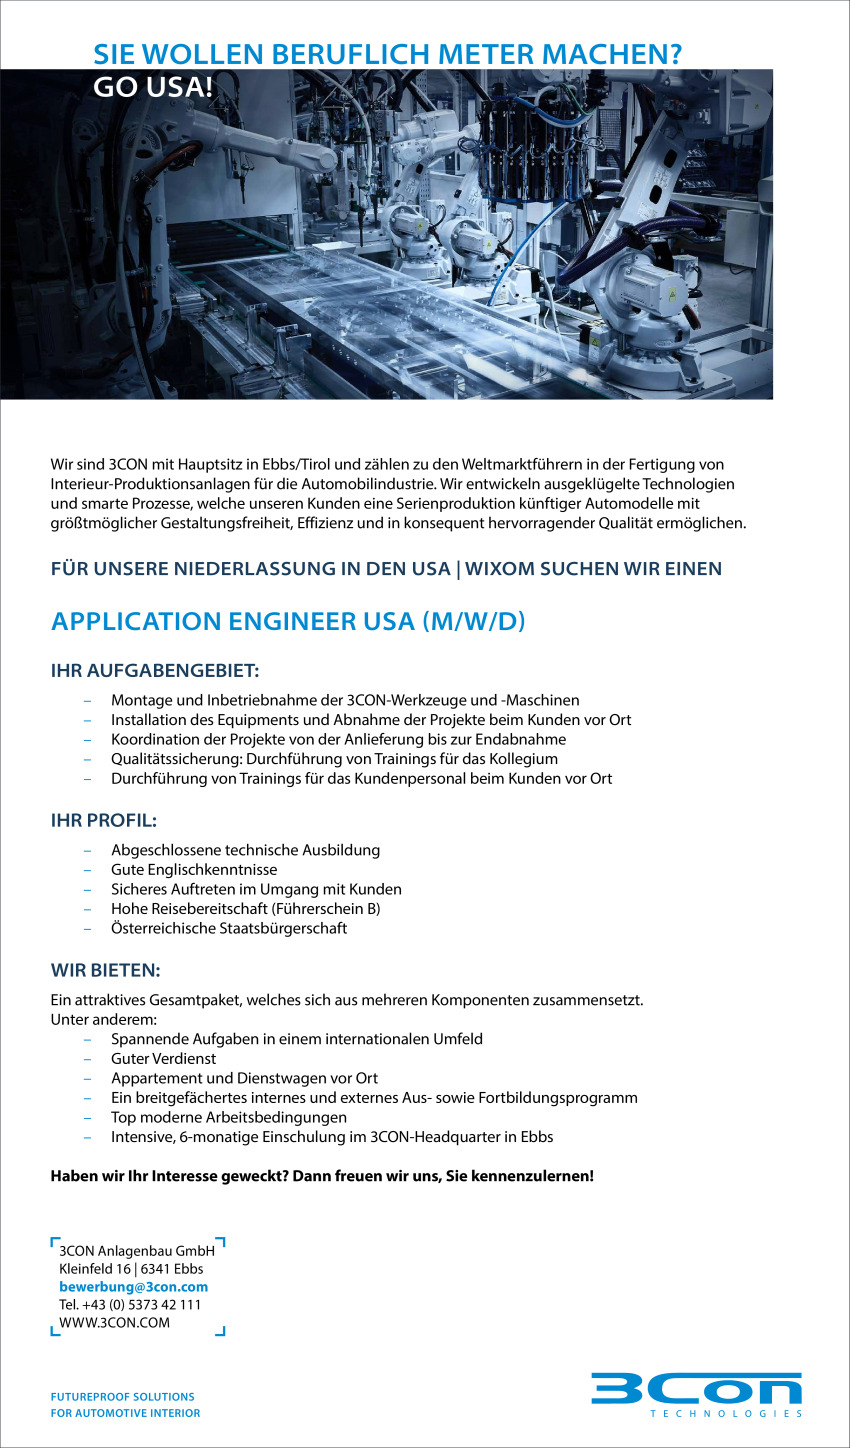 Application Engineer USA (M/W/D)